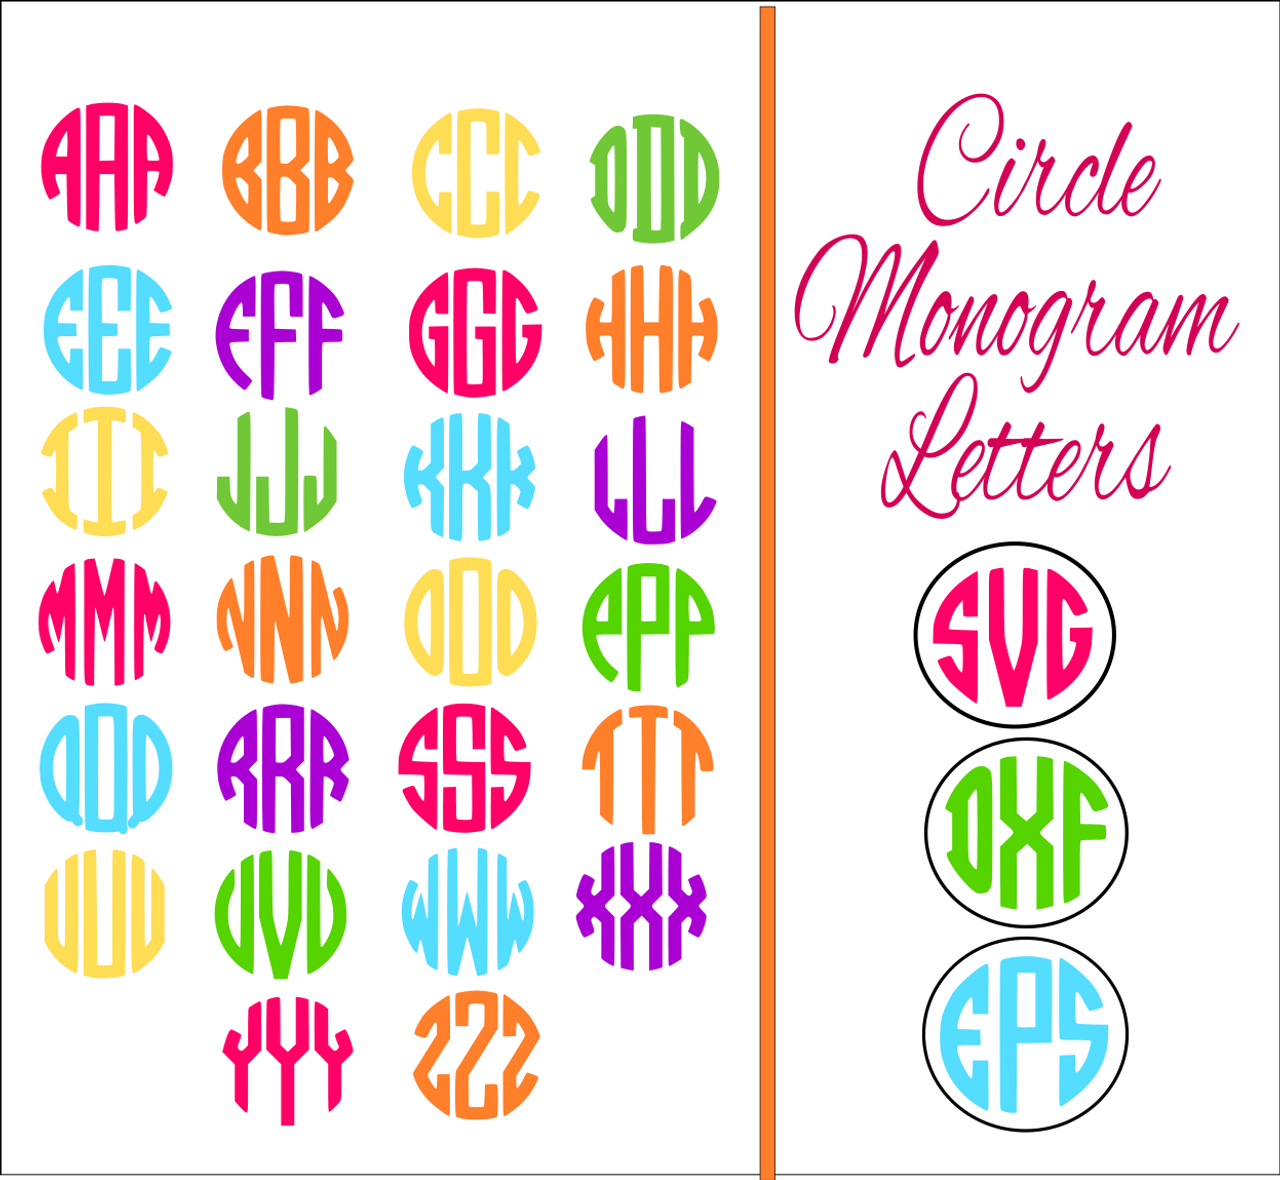 Download Svg Circle Monogram Alphabet Letters Catching Colorflies